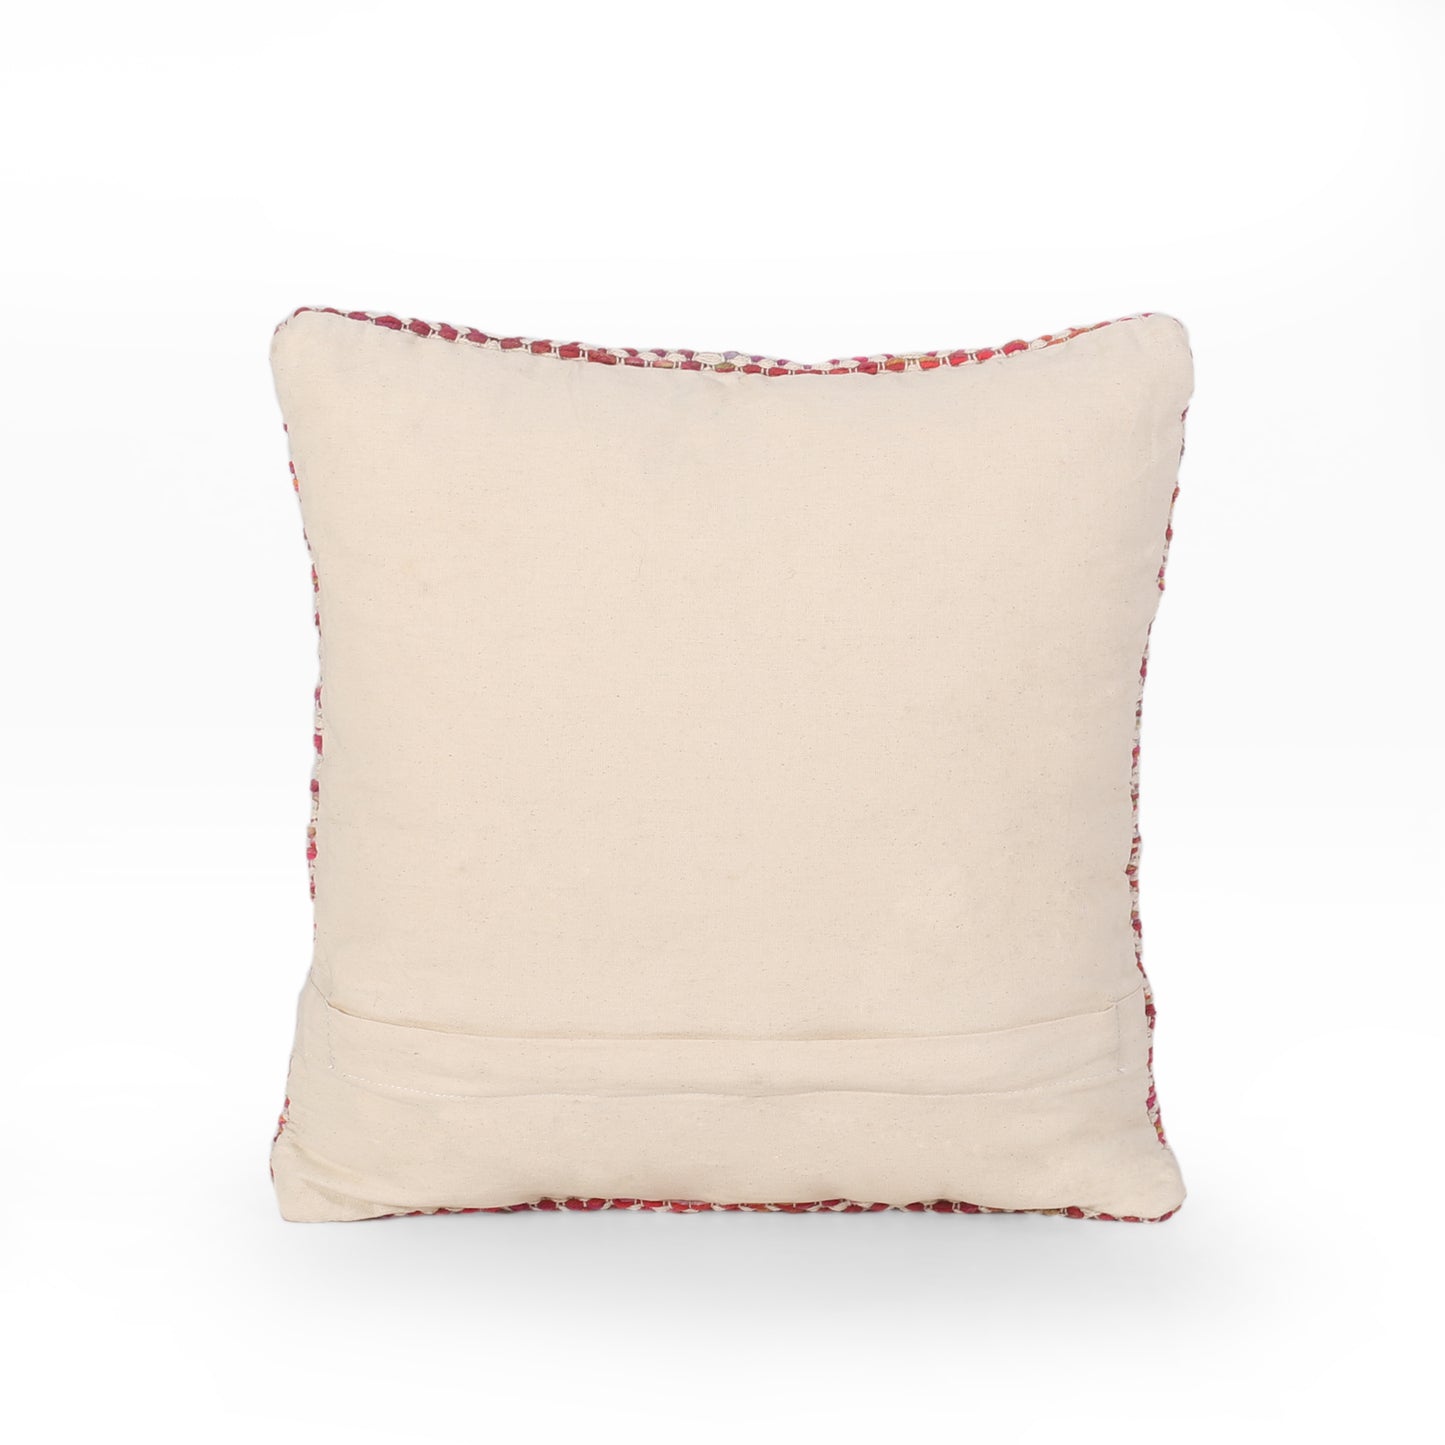 Kristal Boho Cotton Pillow Cover (Set of 2)